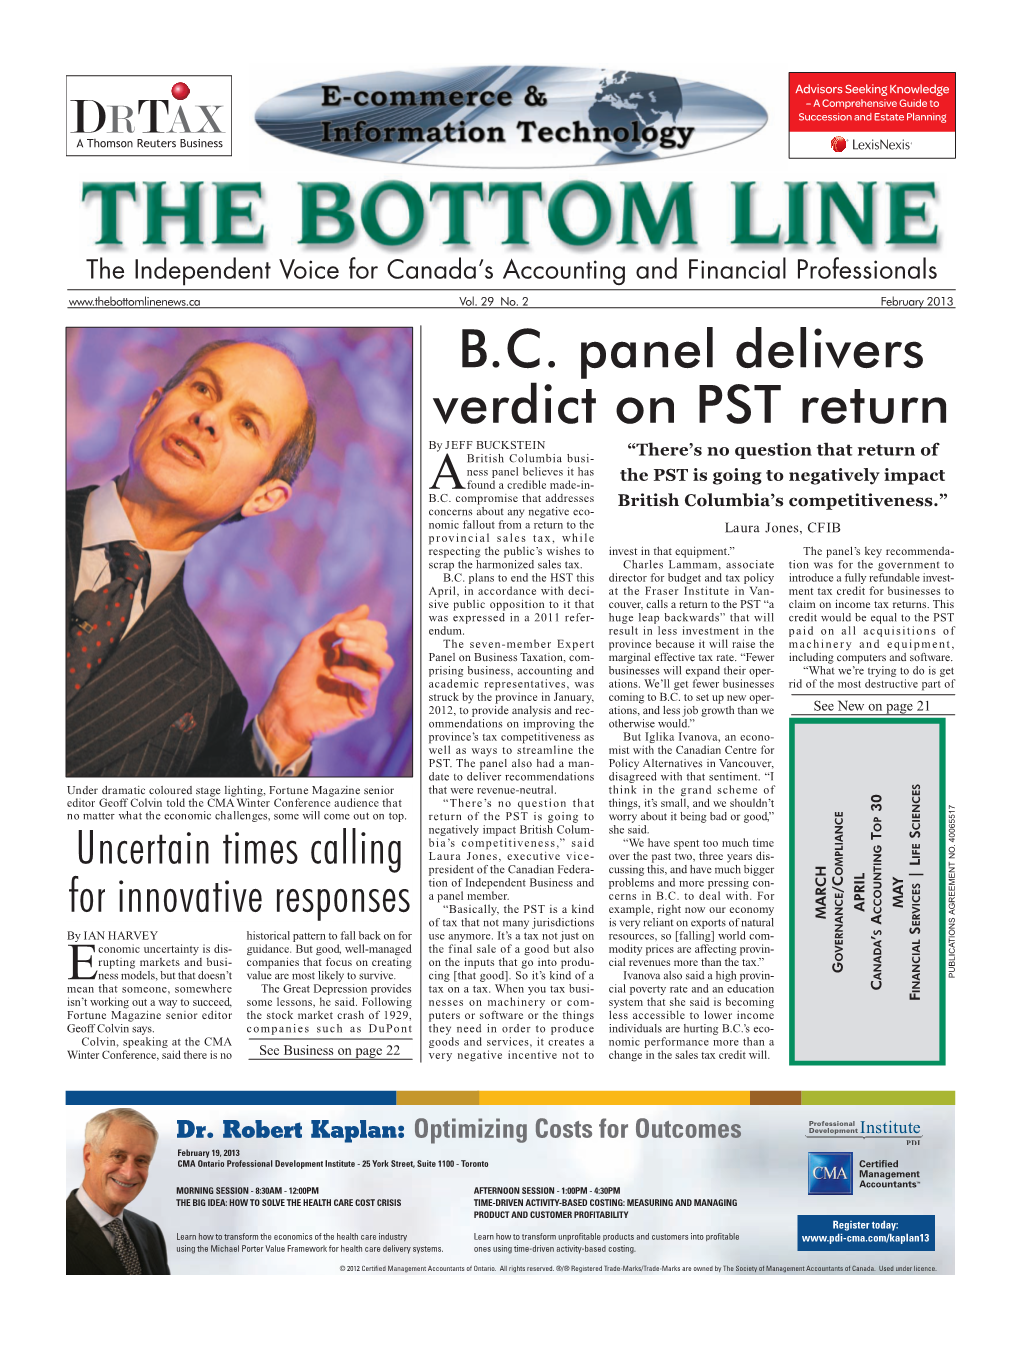 B.C. Panel Delivers Verdict on PST Return